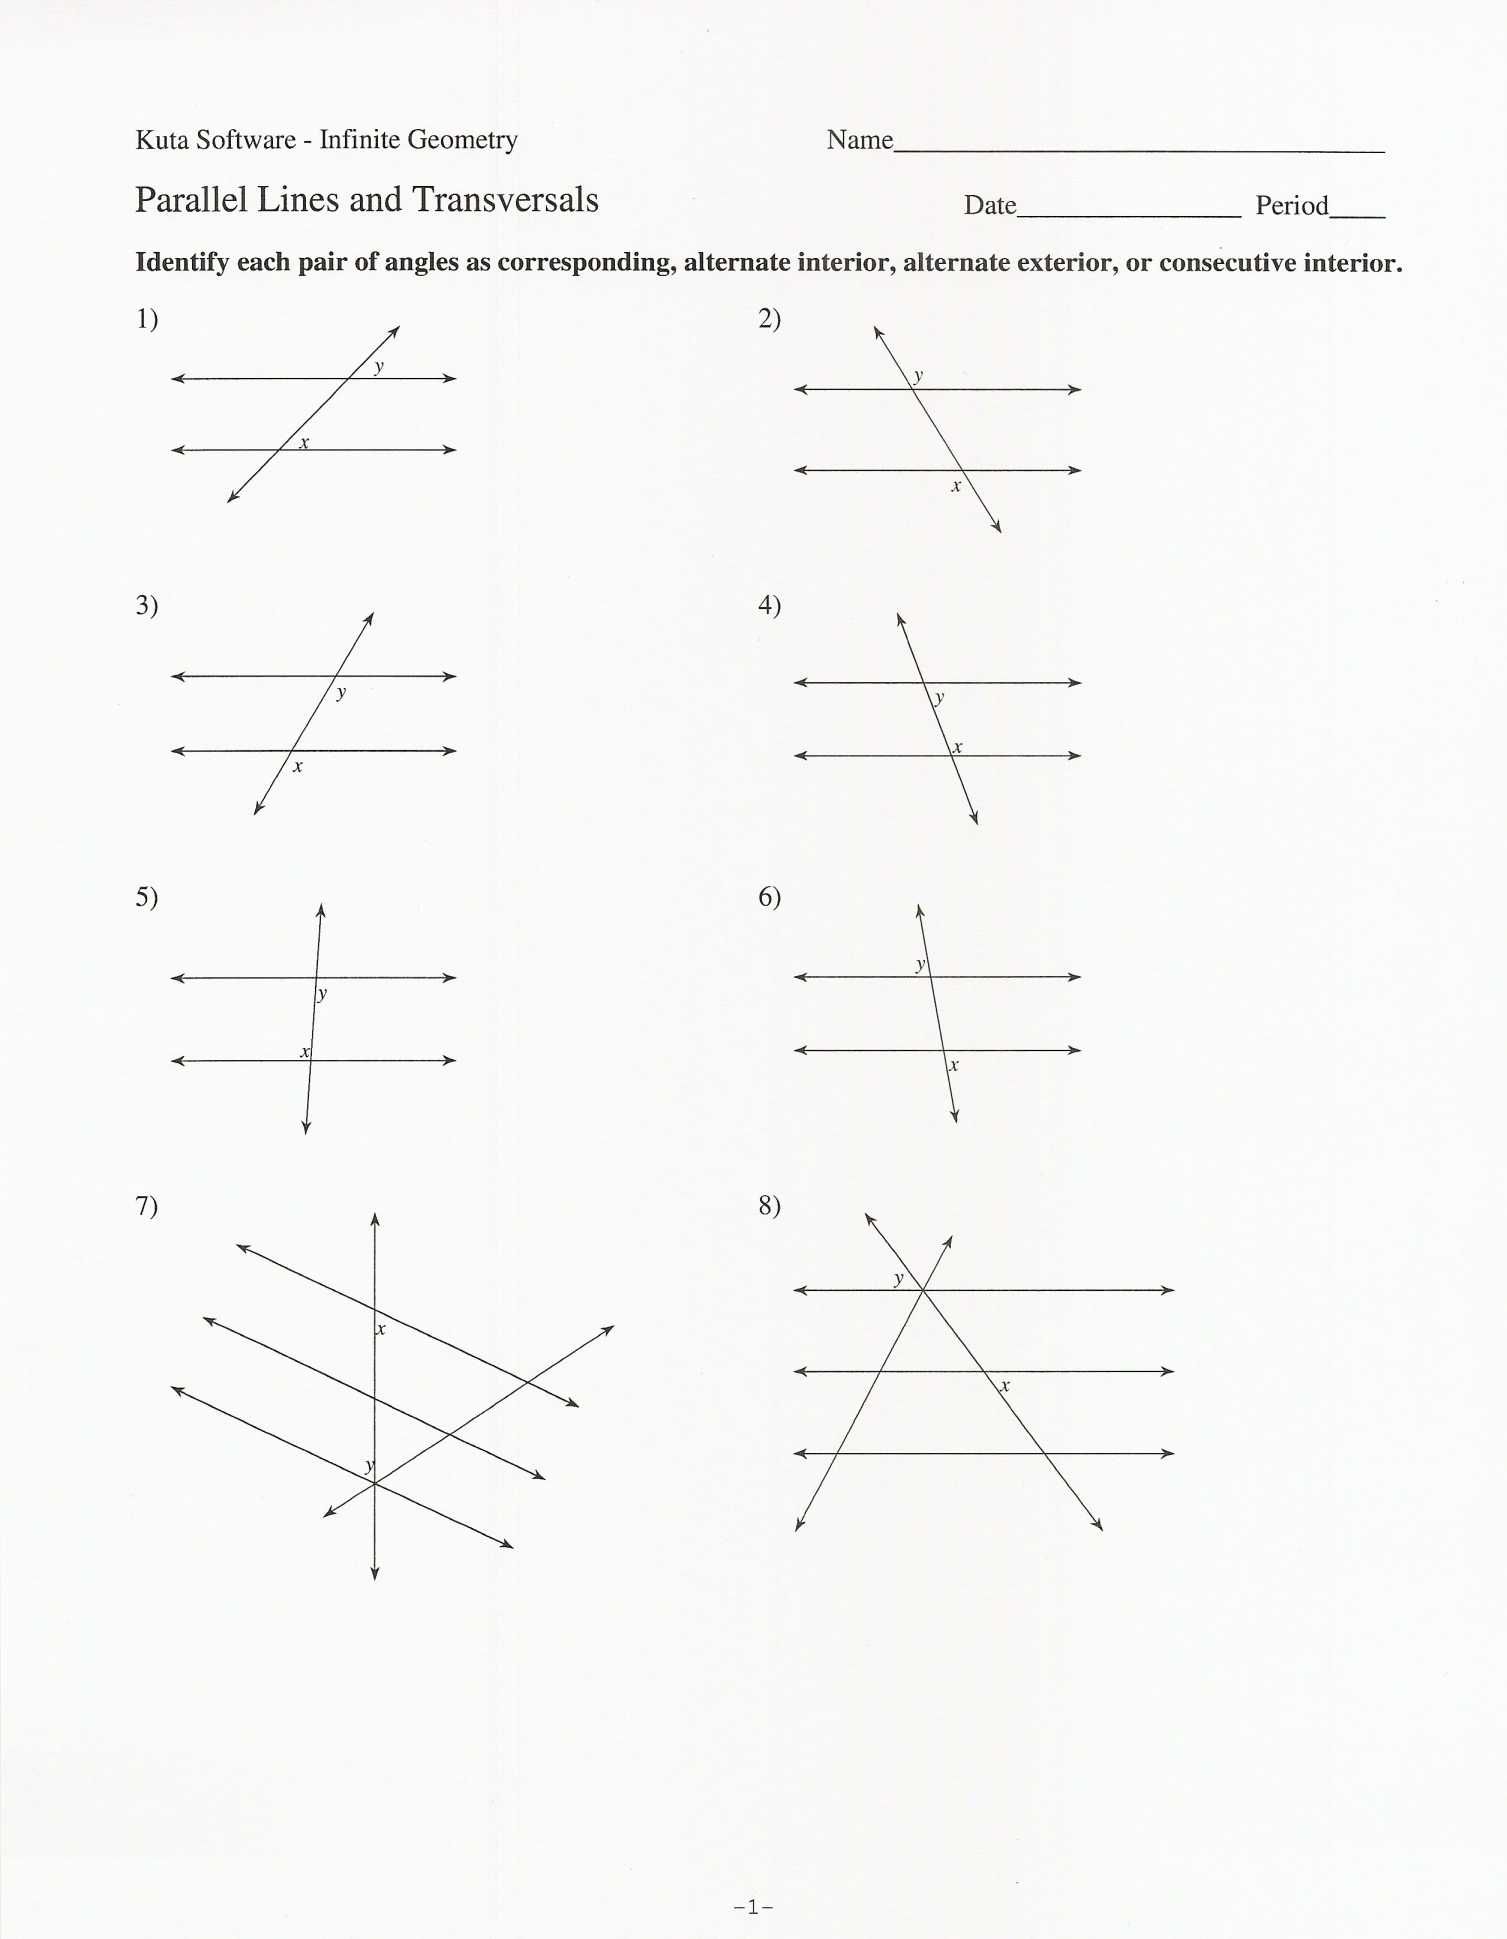 worksheet-on-parallel-lines-and-transversals-geometry-answer-key-tutordale